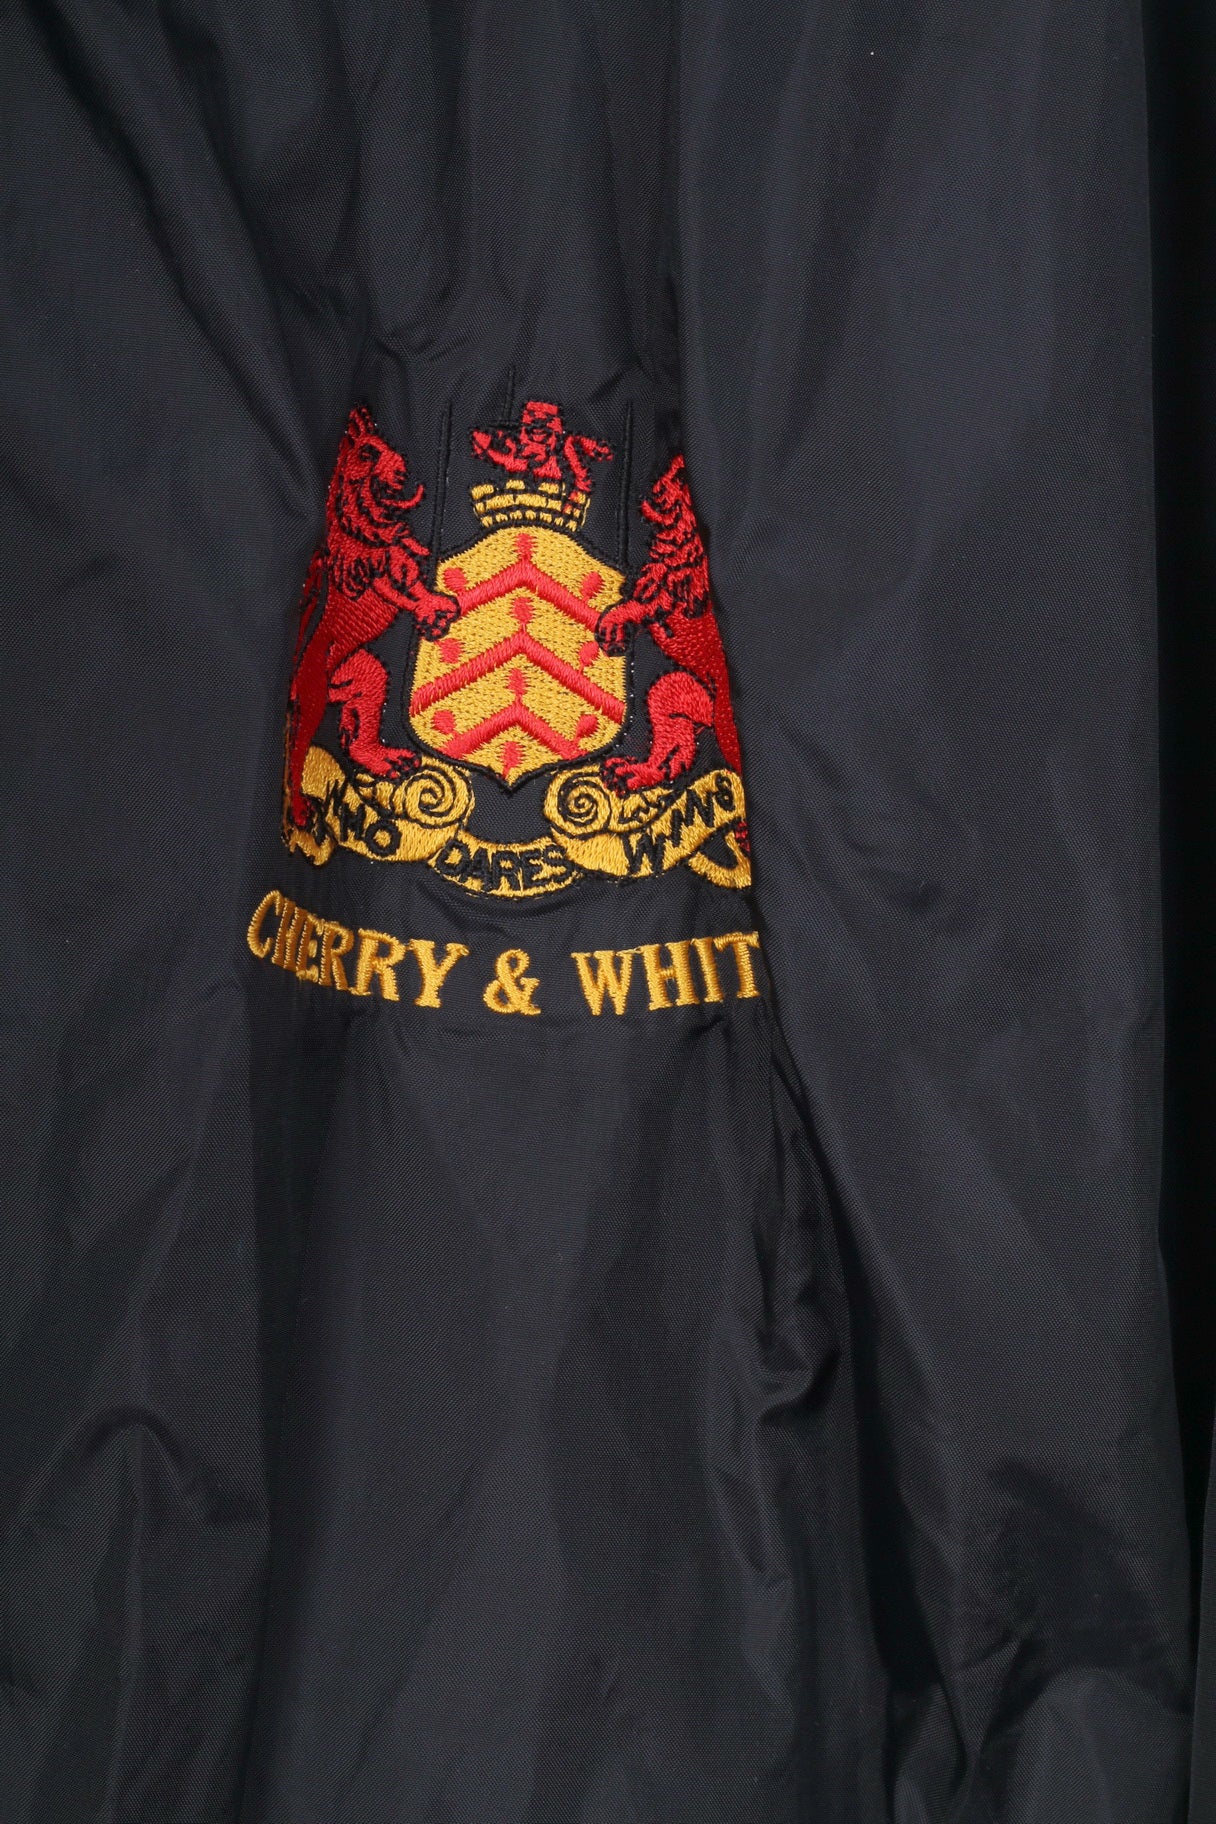 Cherry &Whites Mens 2XL Jacket Lightweight Black Full Zipper Sportswear